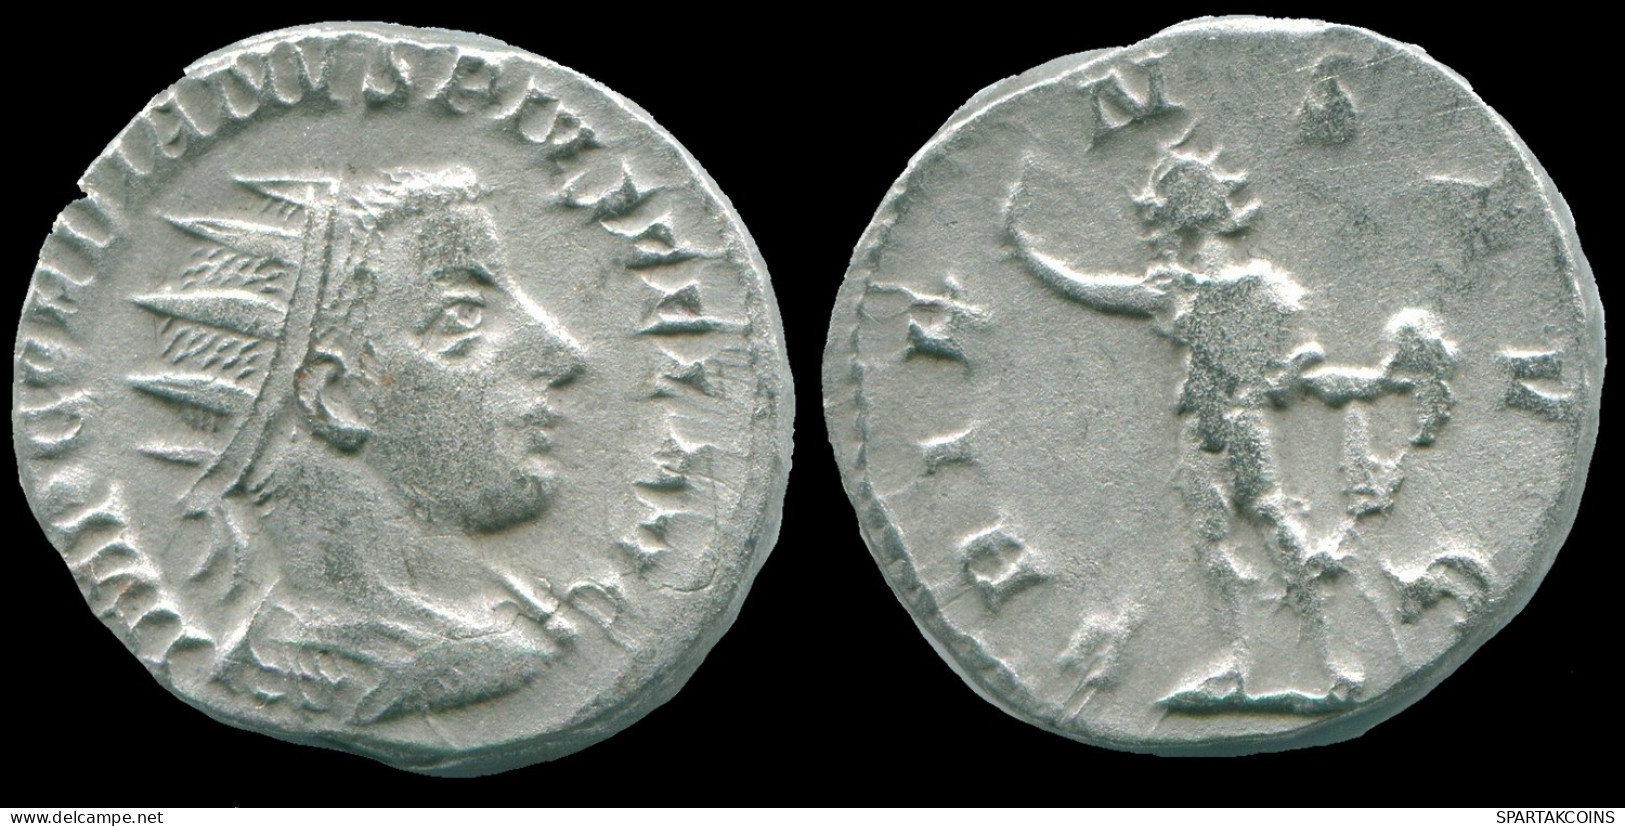 GORDIAN III AR ANTONINIANUS ANTIOCH Mint AD 243-244 ORIENS AVG #ANC13166.35.E.A - La Crisis Militar (235 / 284)